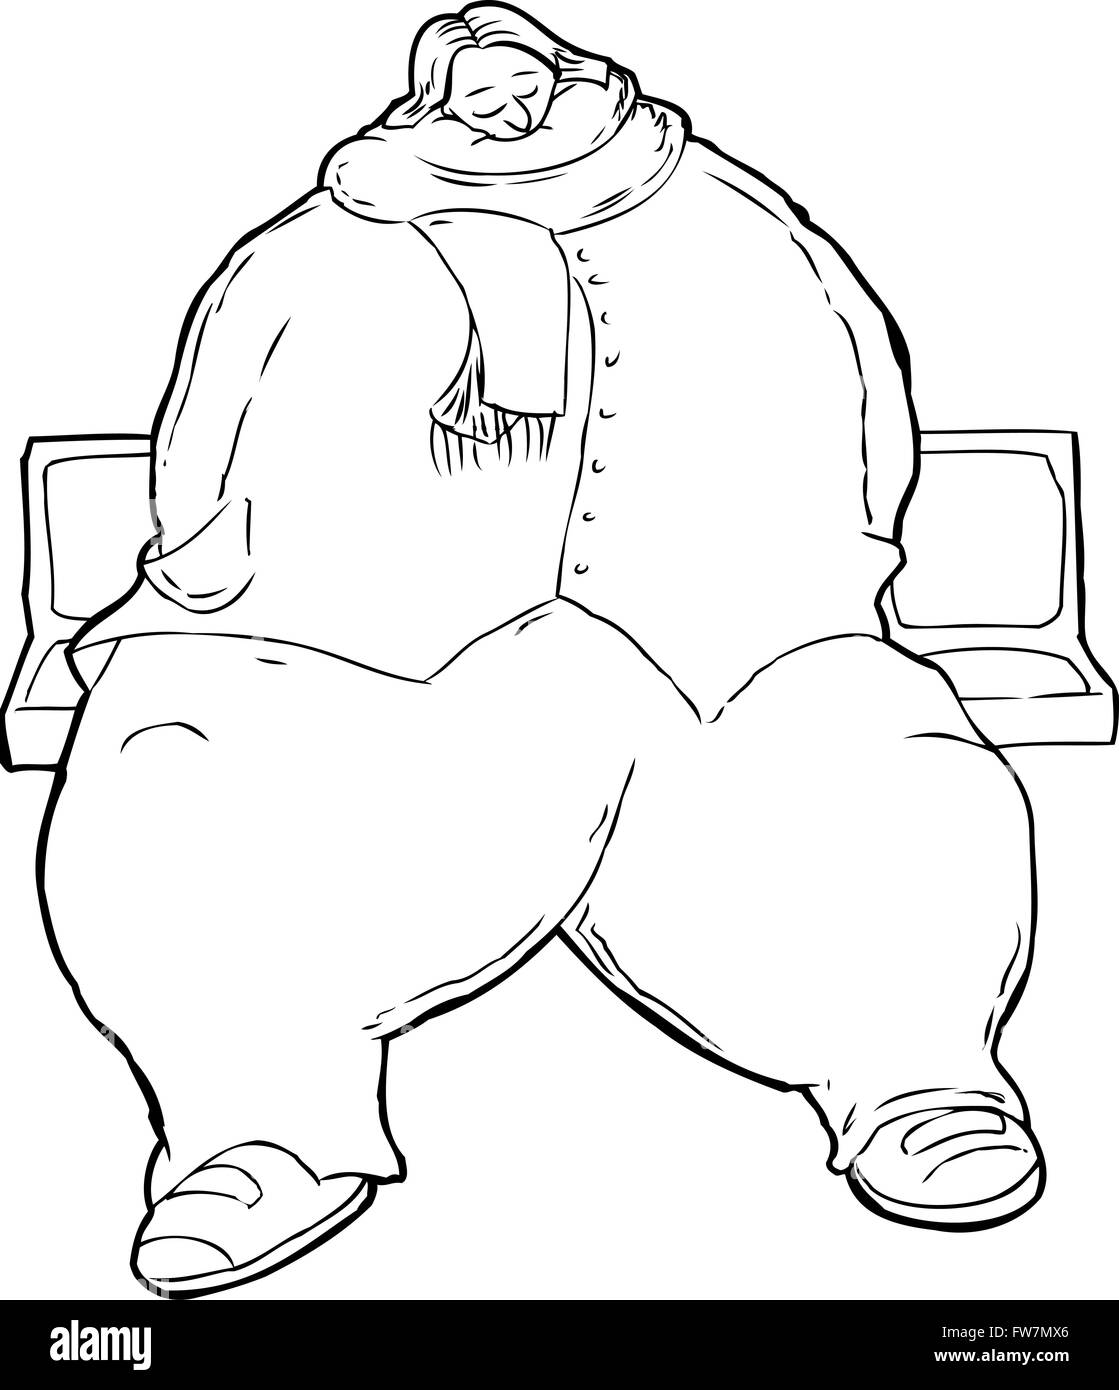 Outline cartoon of single obese European woman sitting on bus seat Stock Photo